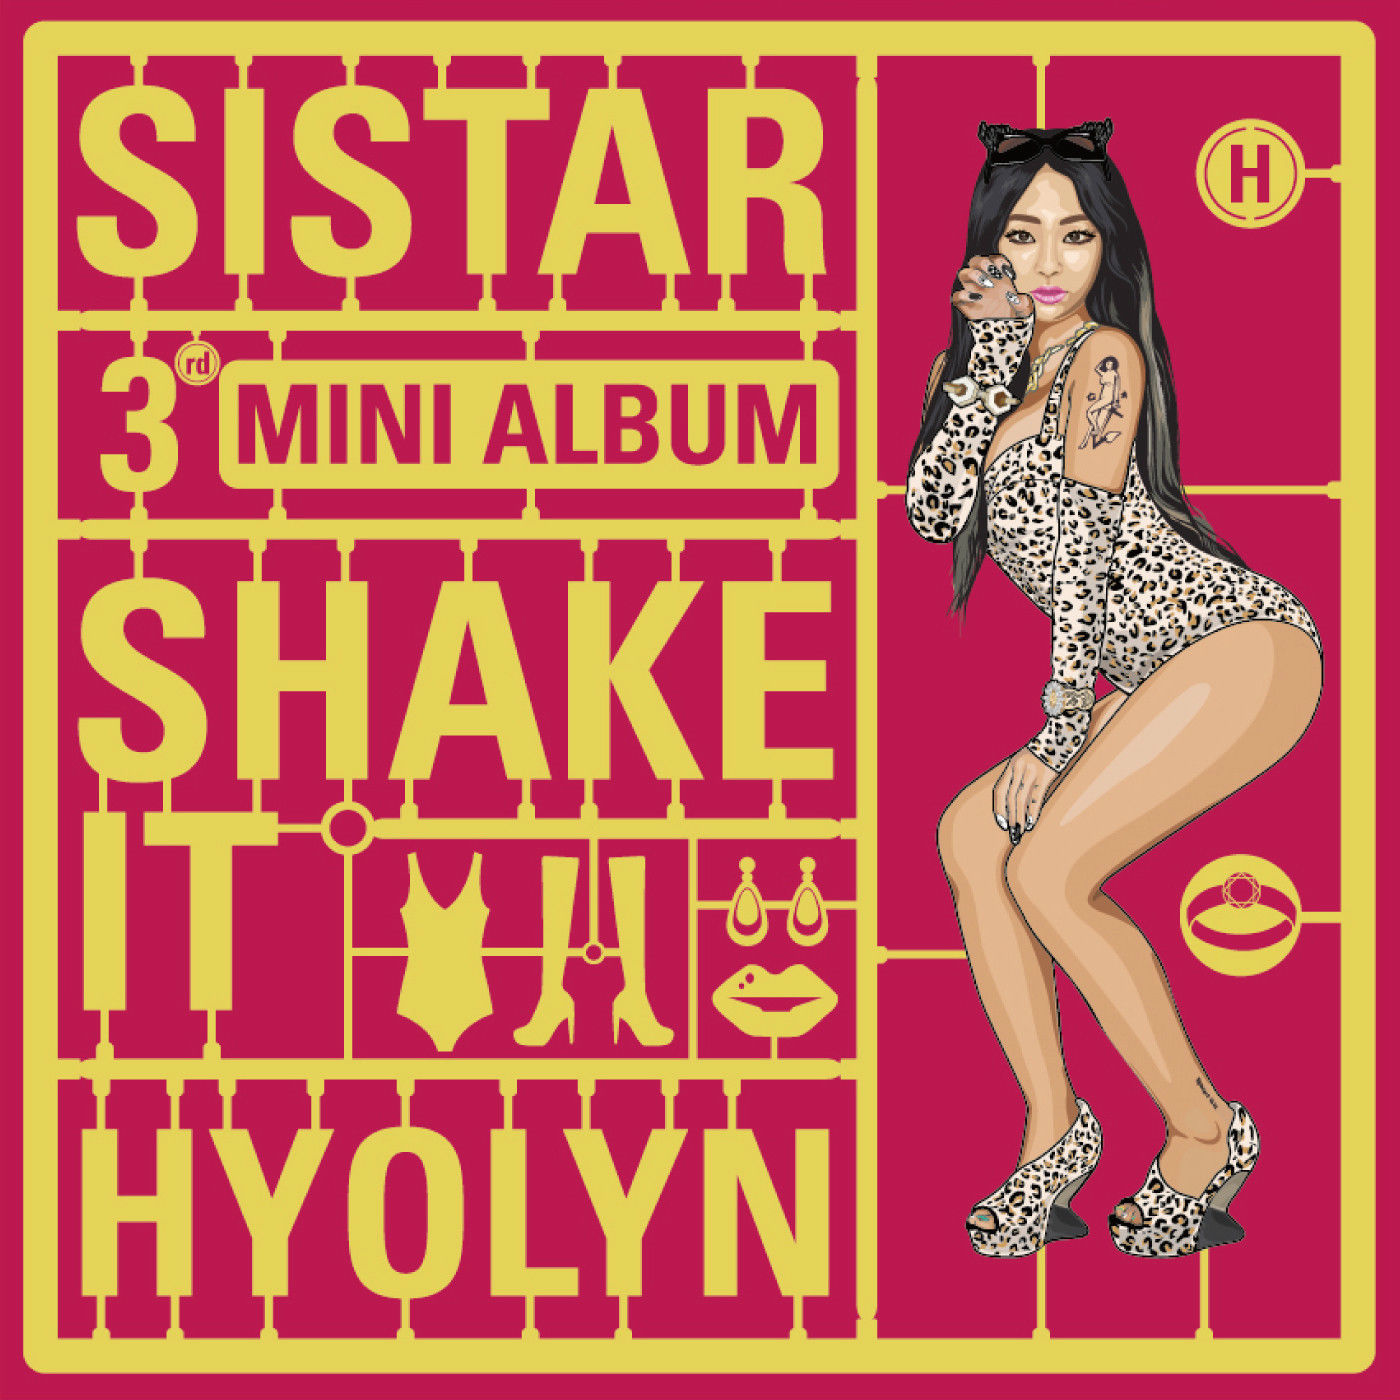 SISTAR - Shake It (Hyolyn ver.) cover art